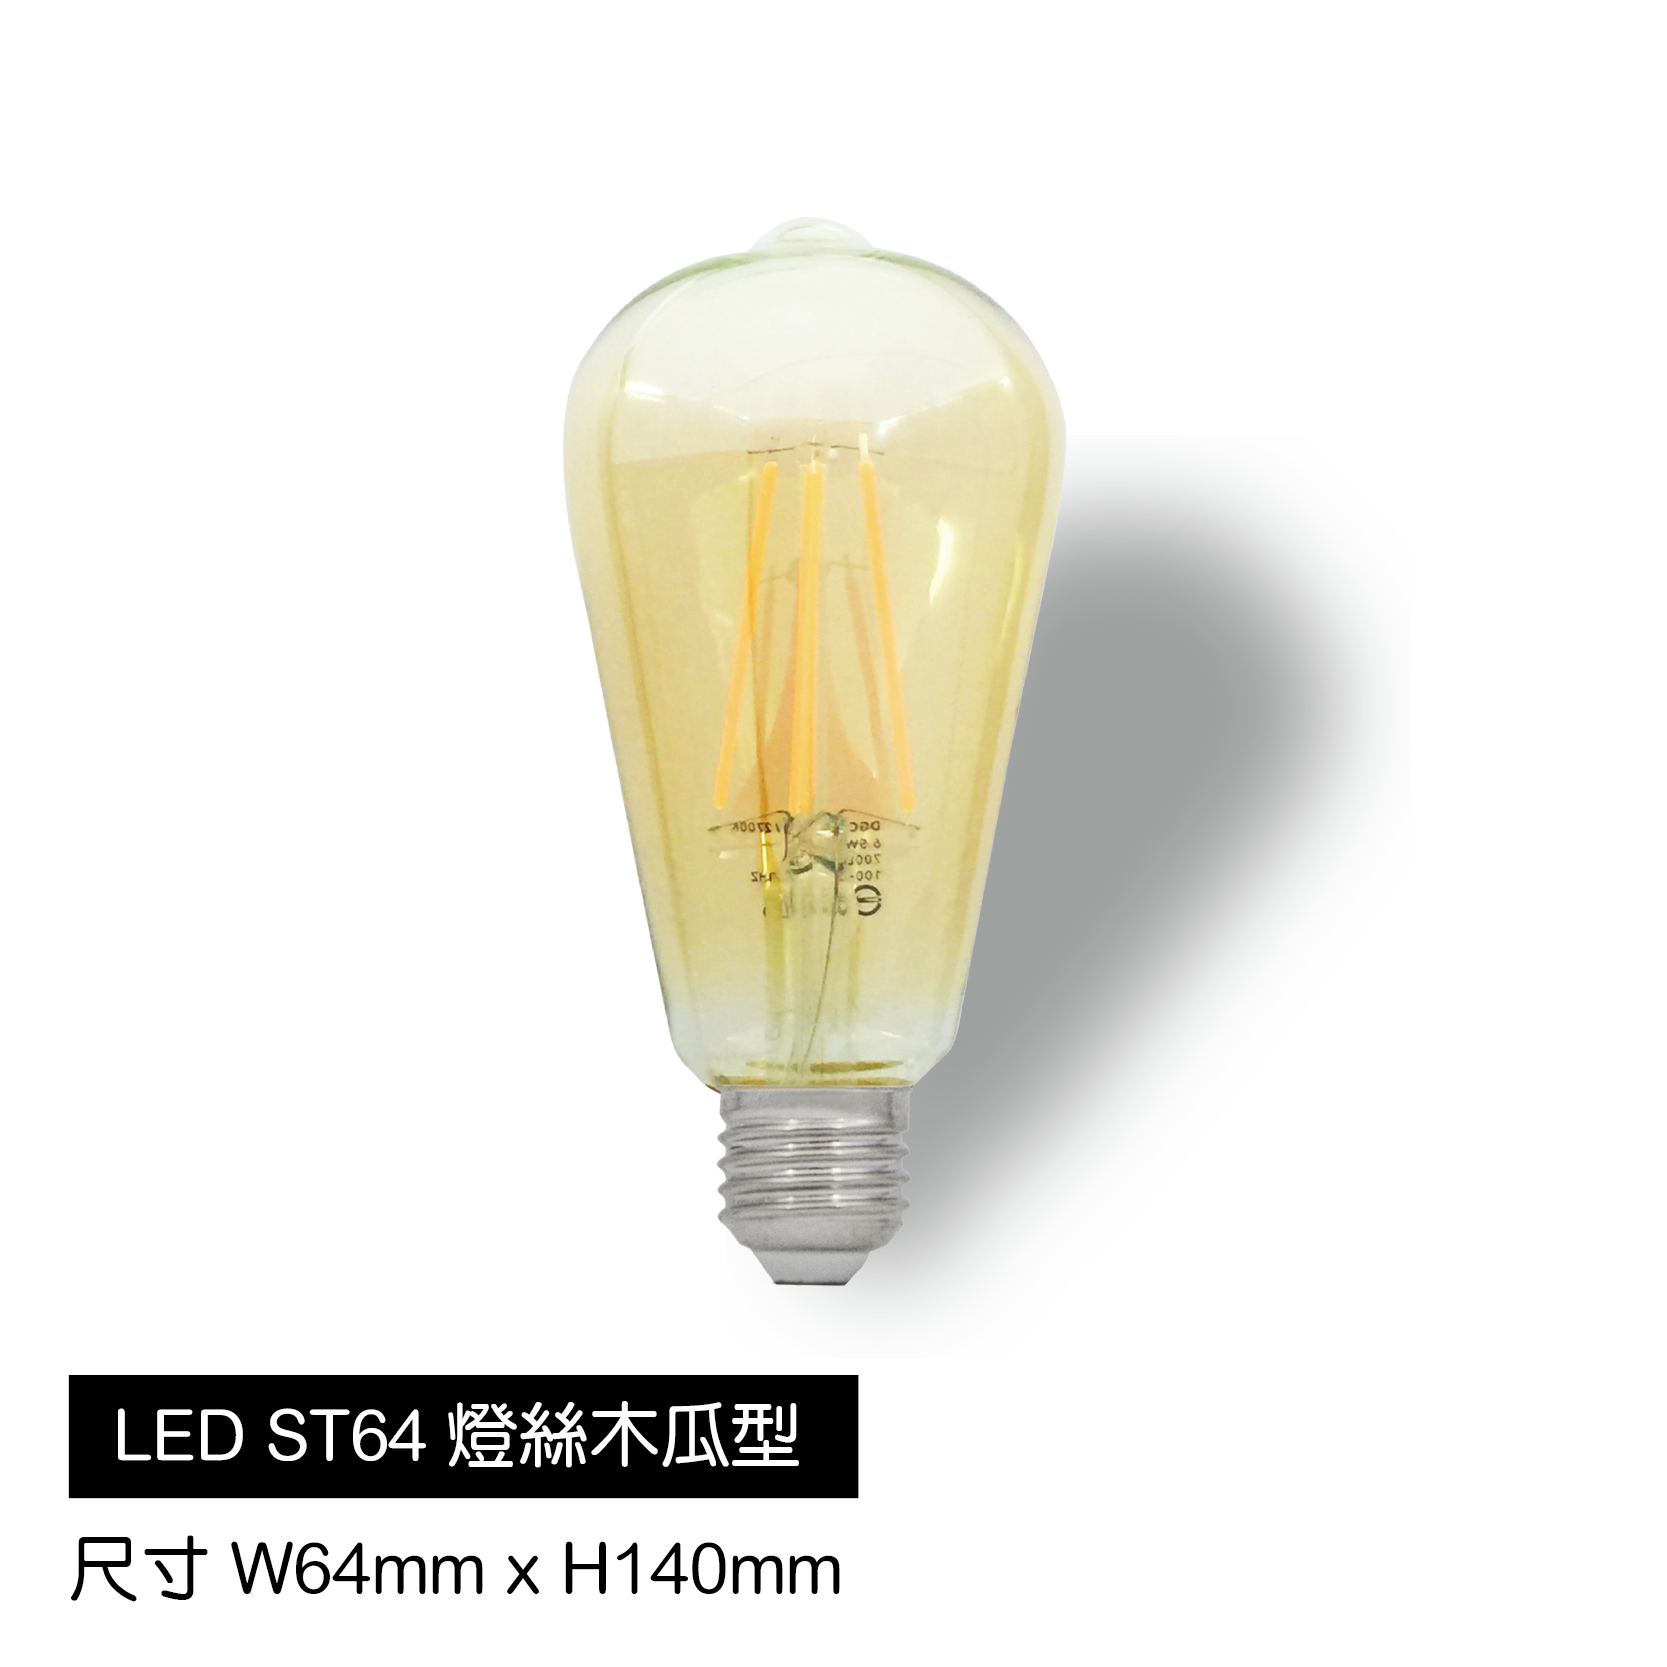 LED-ST64-木瓜型燈泡